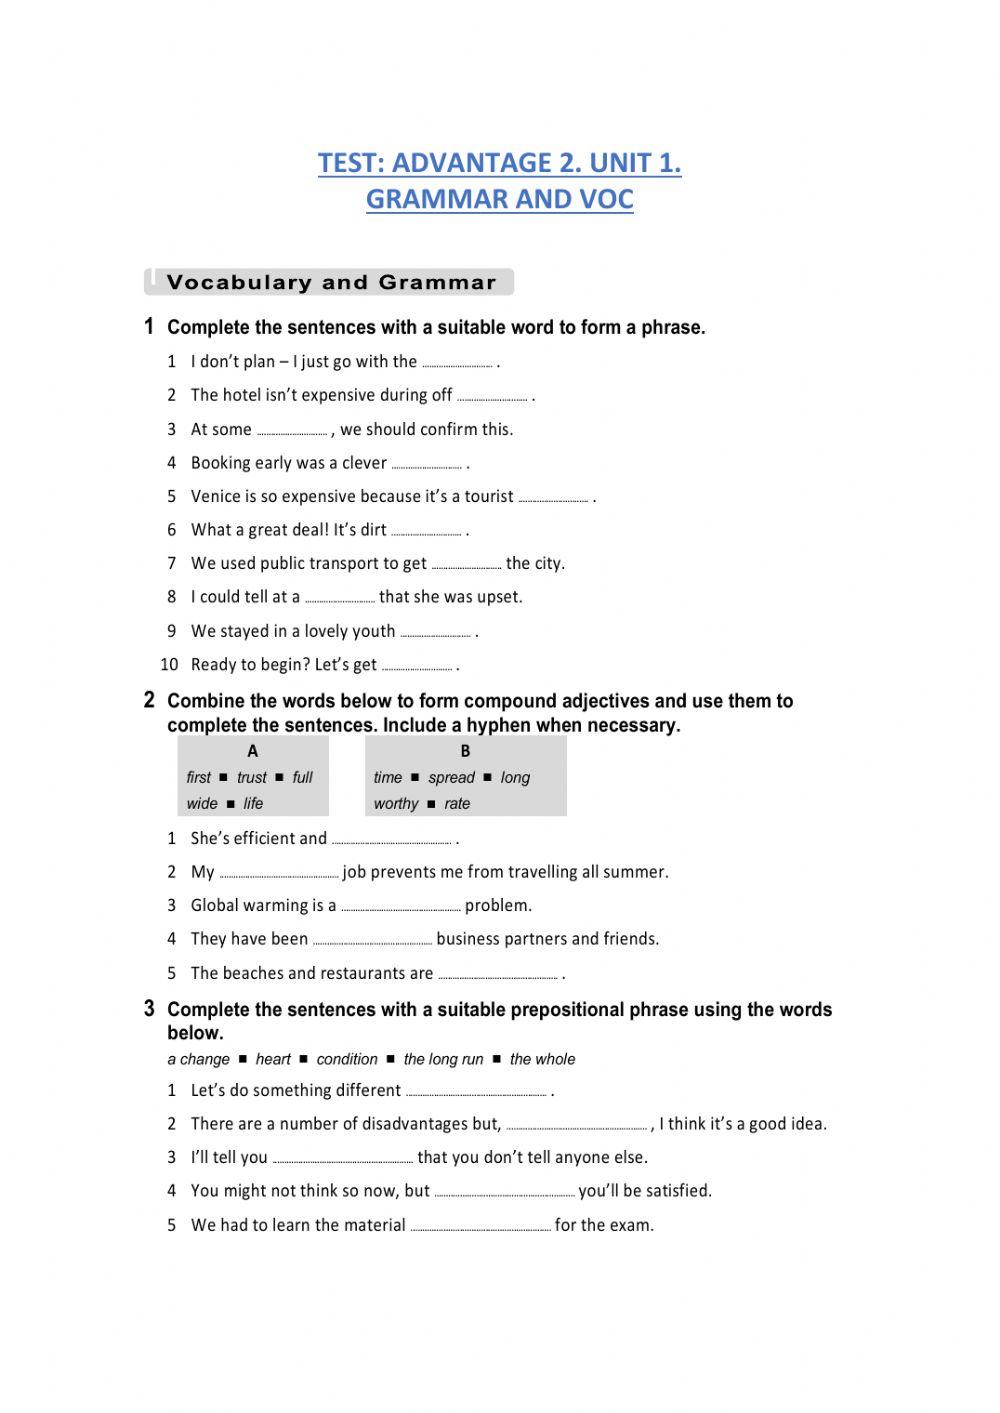 Advantage 2. grammar and vocabulary test .unit 1